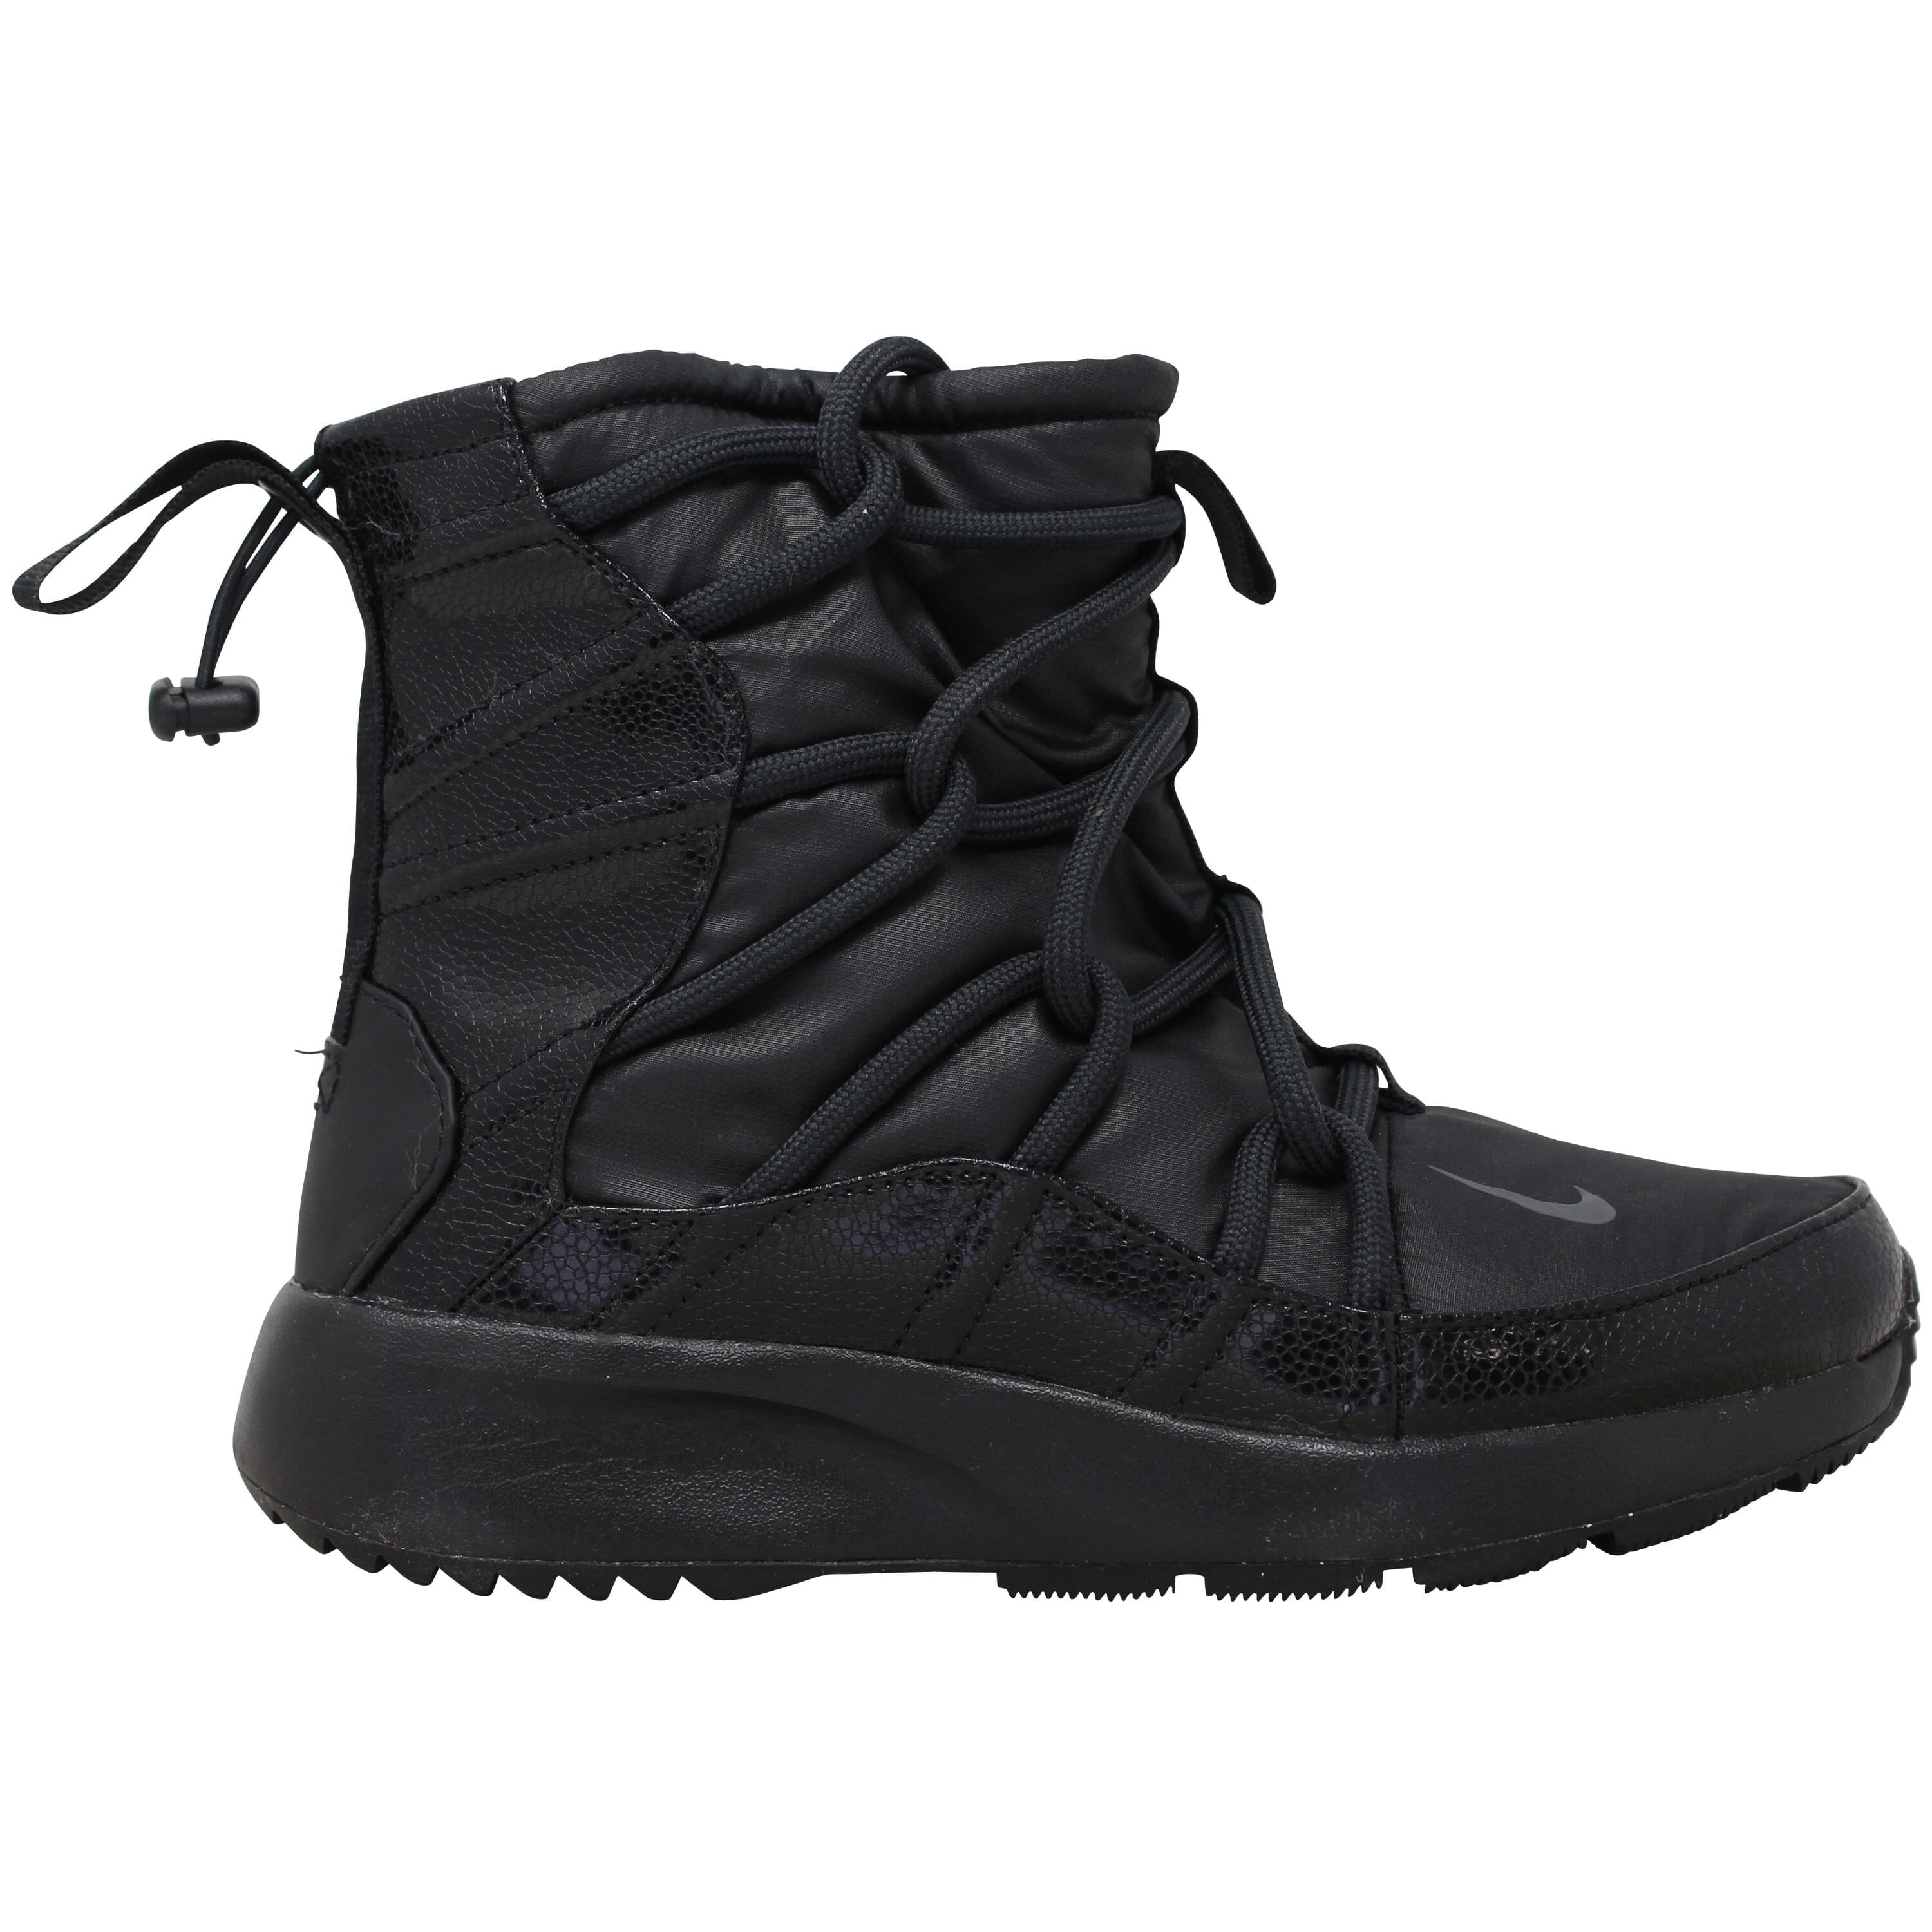 Nike Tanjun High Black/Anthracite-Black AO0355-004 Size Medium Walmart.com